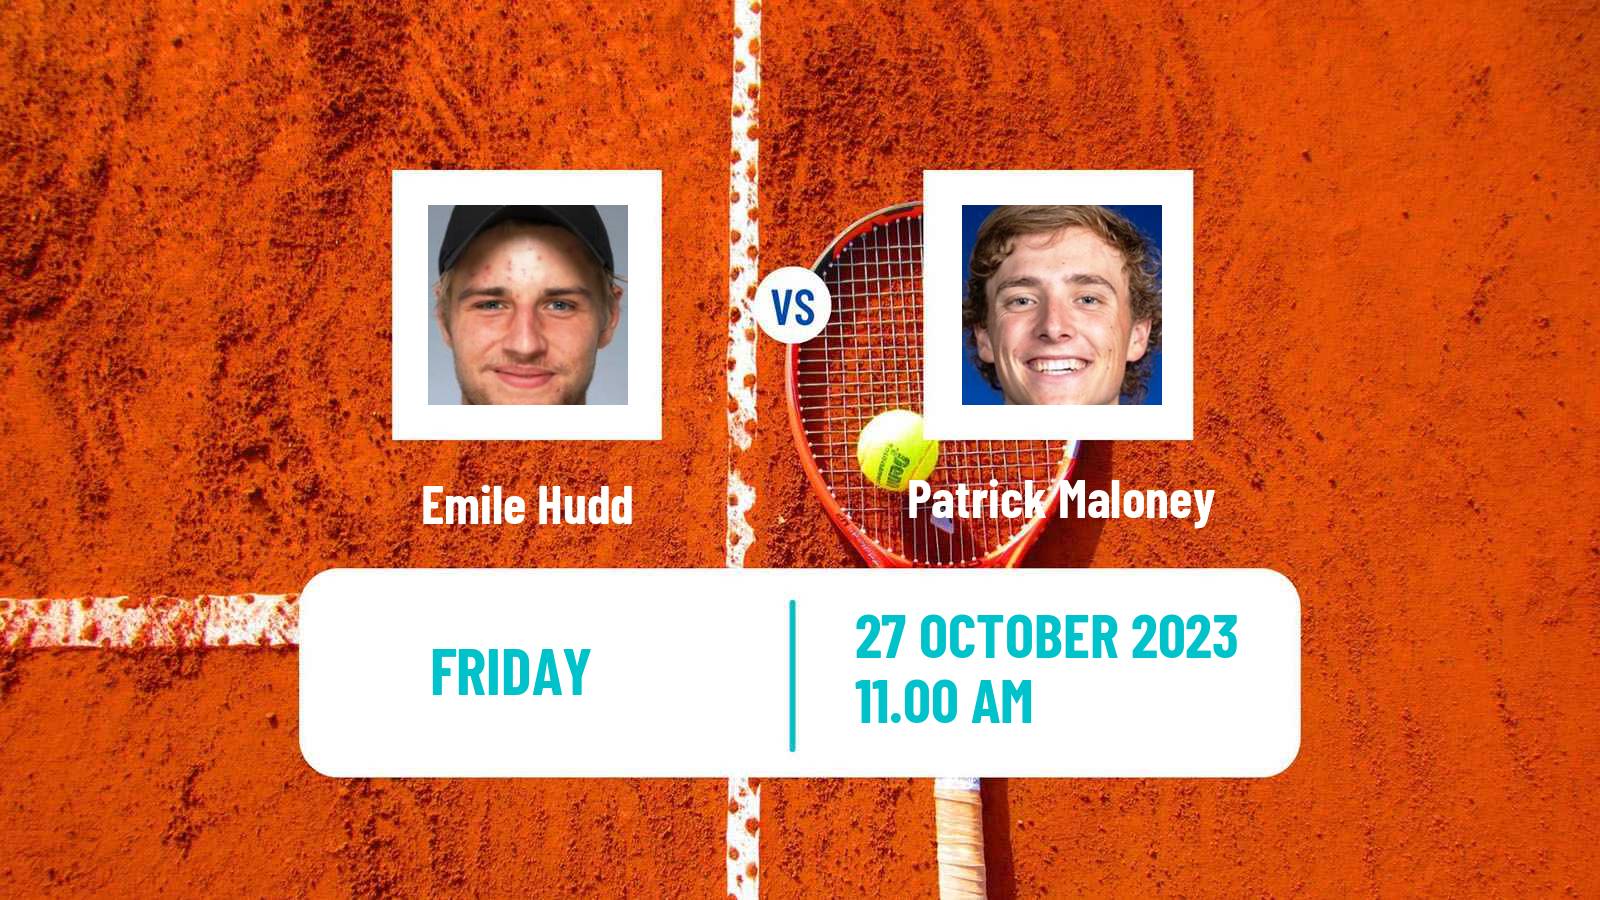 Tennis ITF M15 Tallahassee Fl Men Emile Hudd - Patrick Maloney